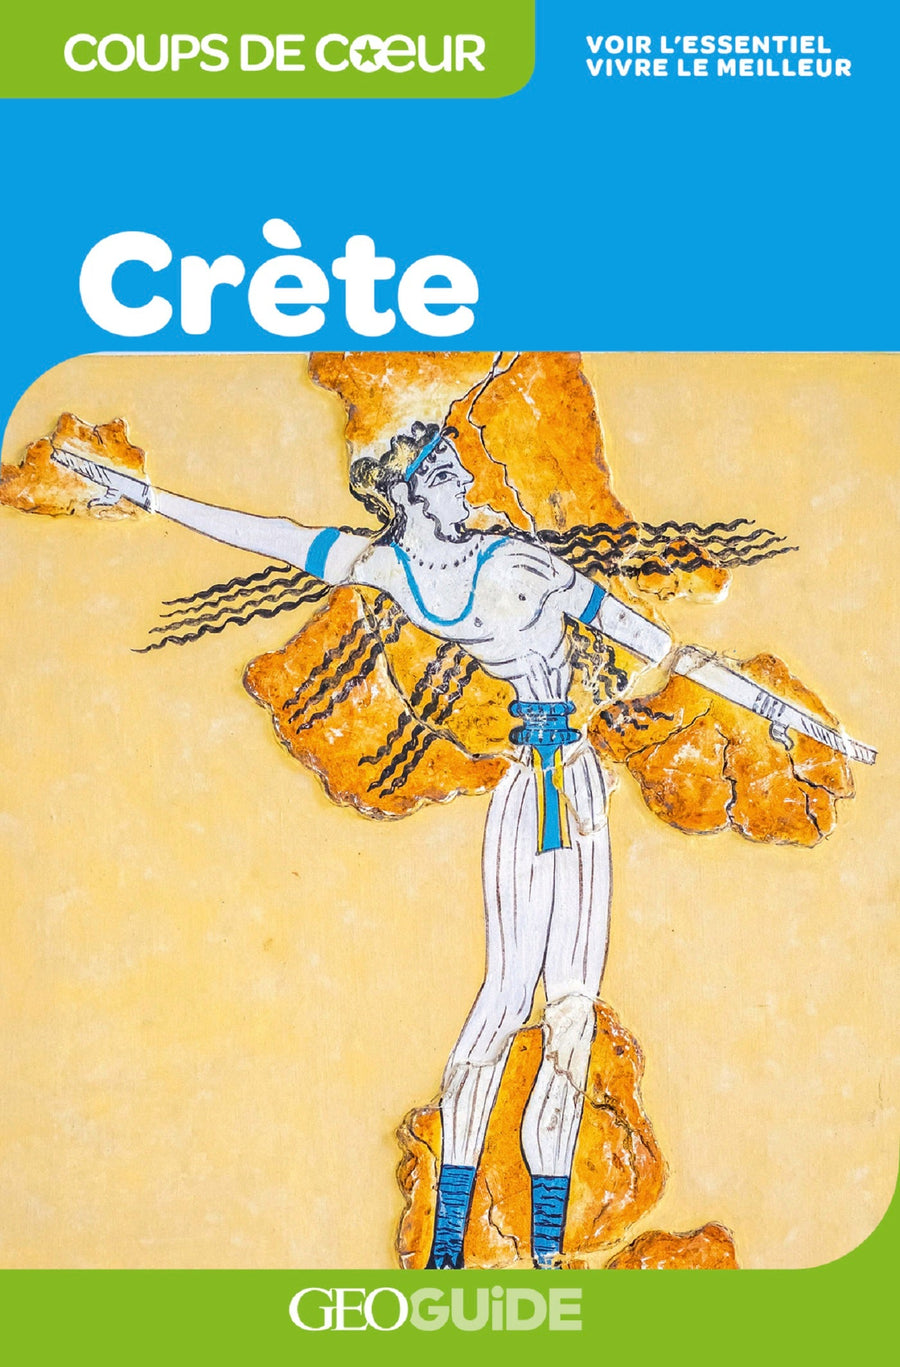 Géoguide (coups de coeur) - Crète | Gallimard guide de voyage Gallimard 